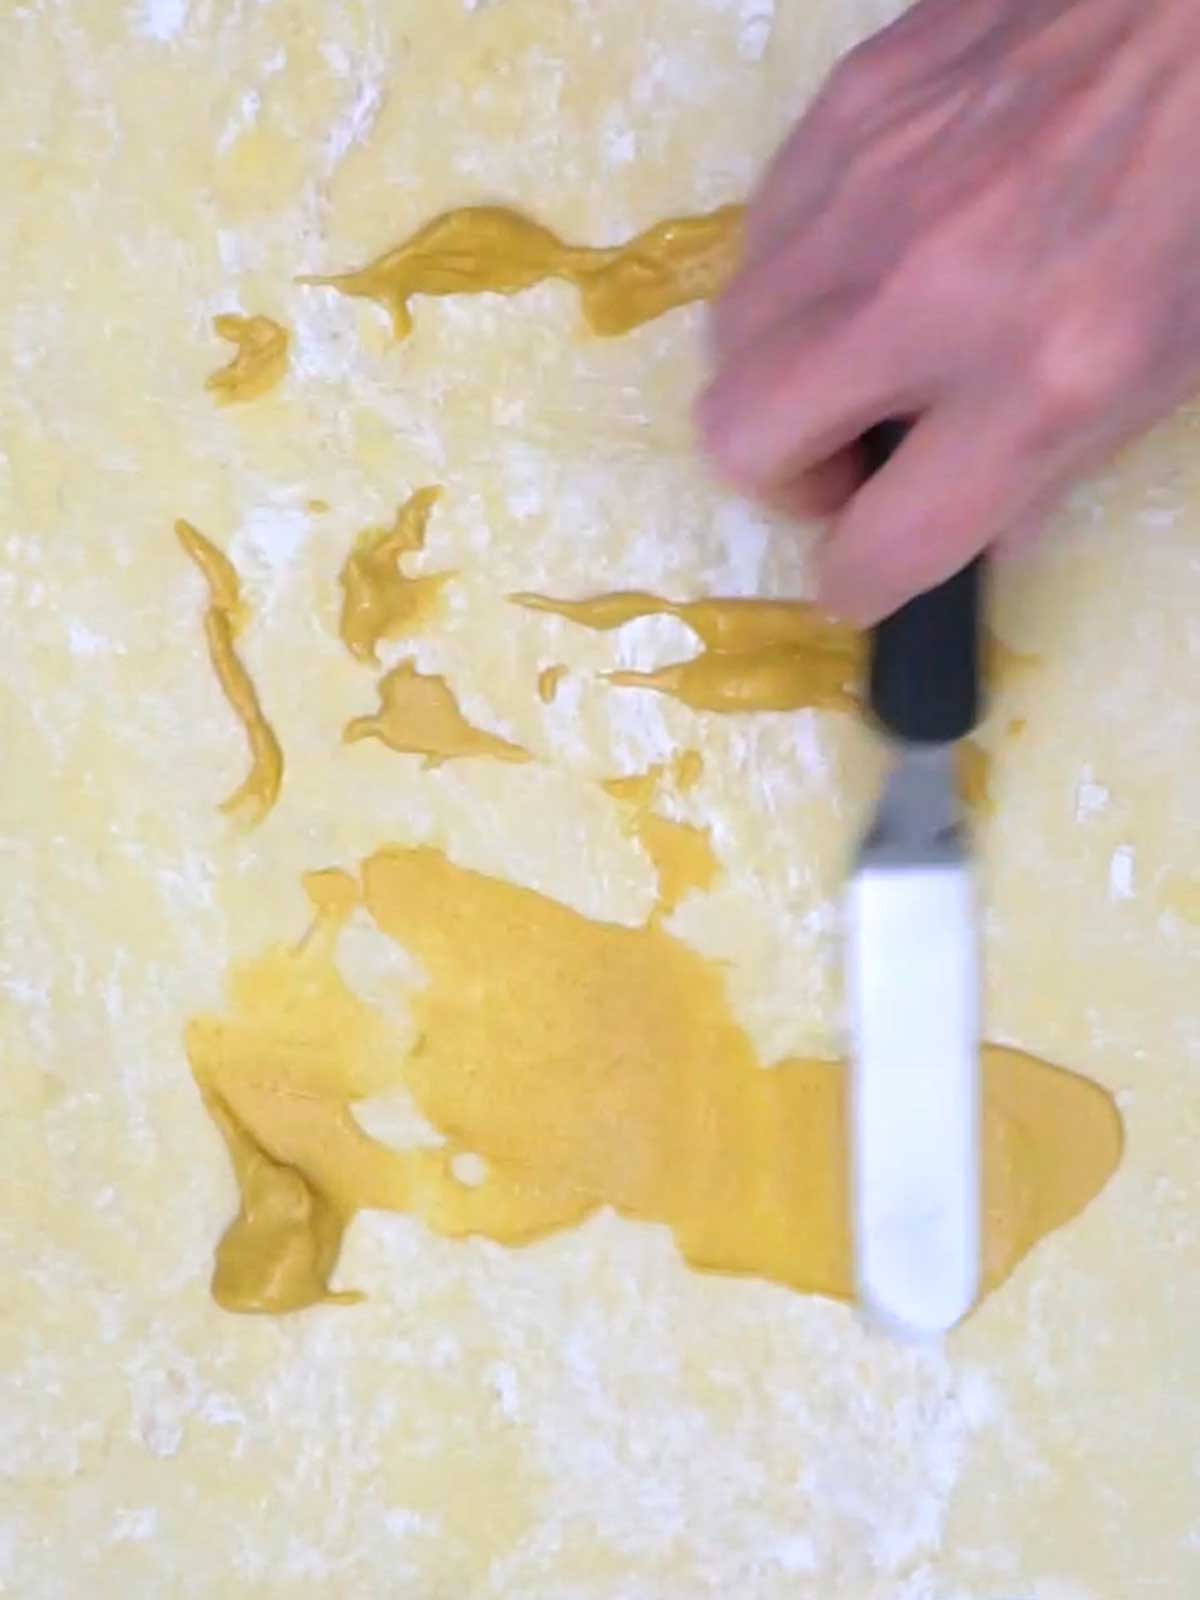 Spreading Dijon mustard on puff pastry sheet.